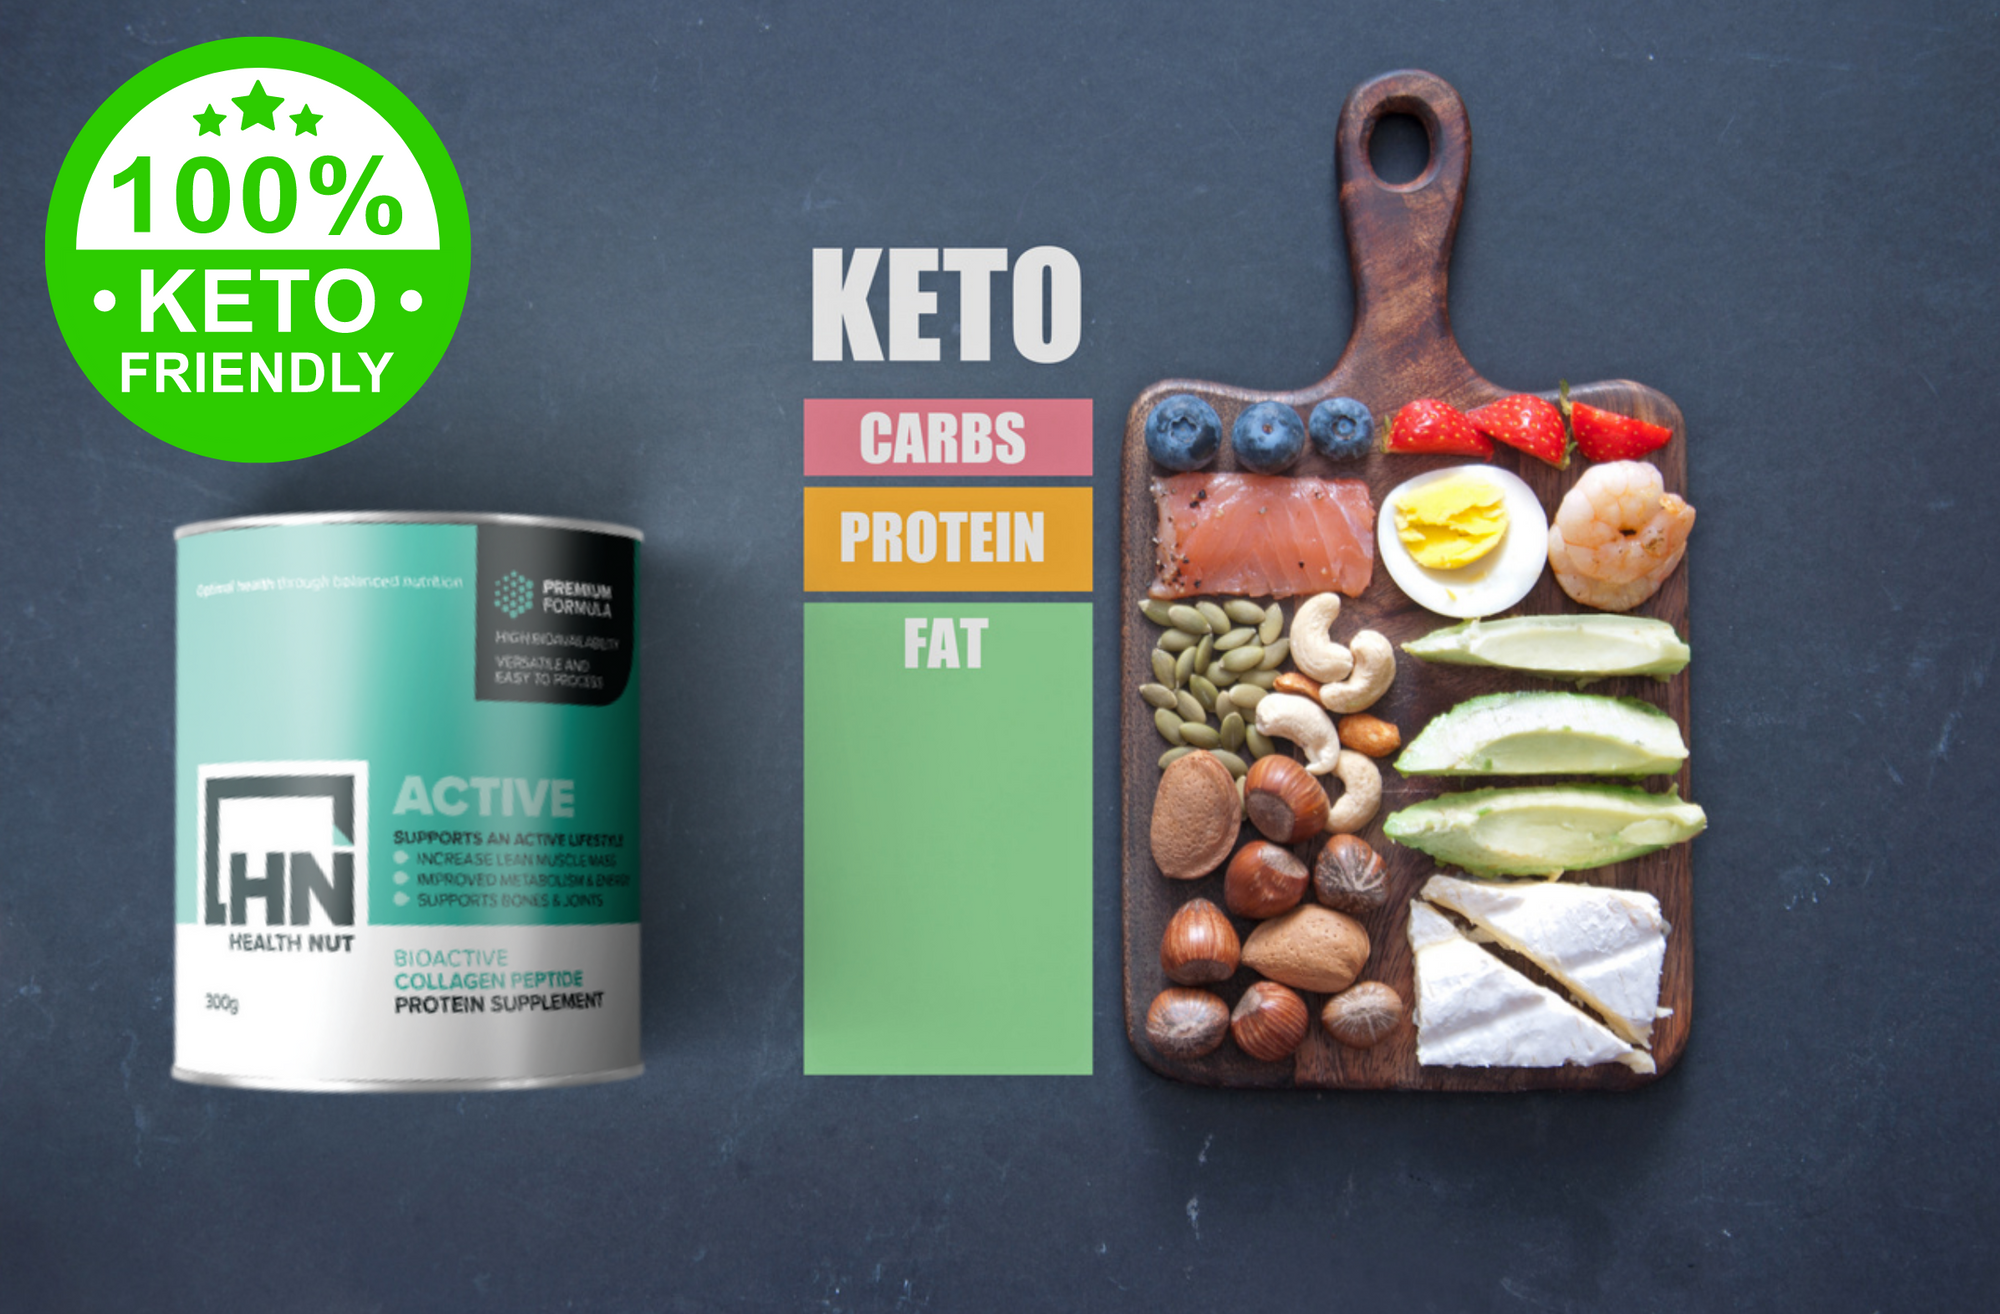 collagen benefits for keto diets